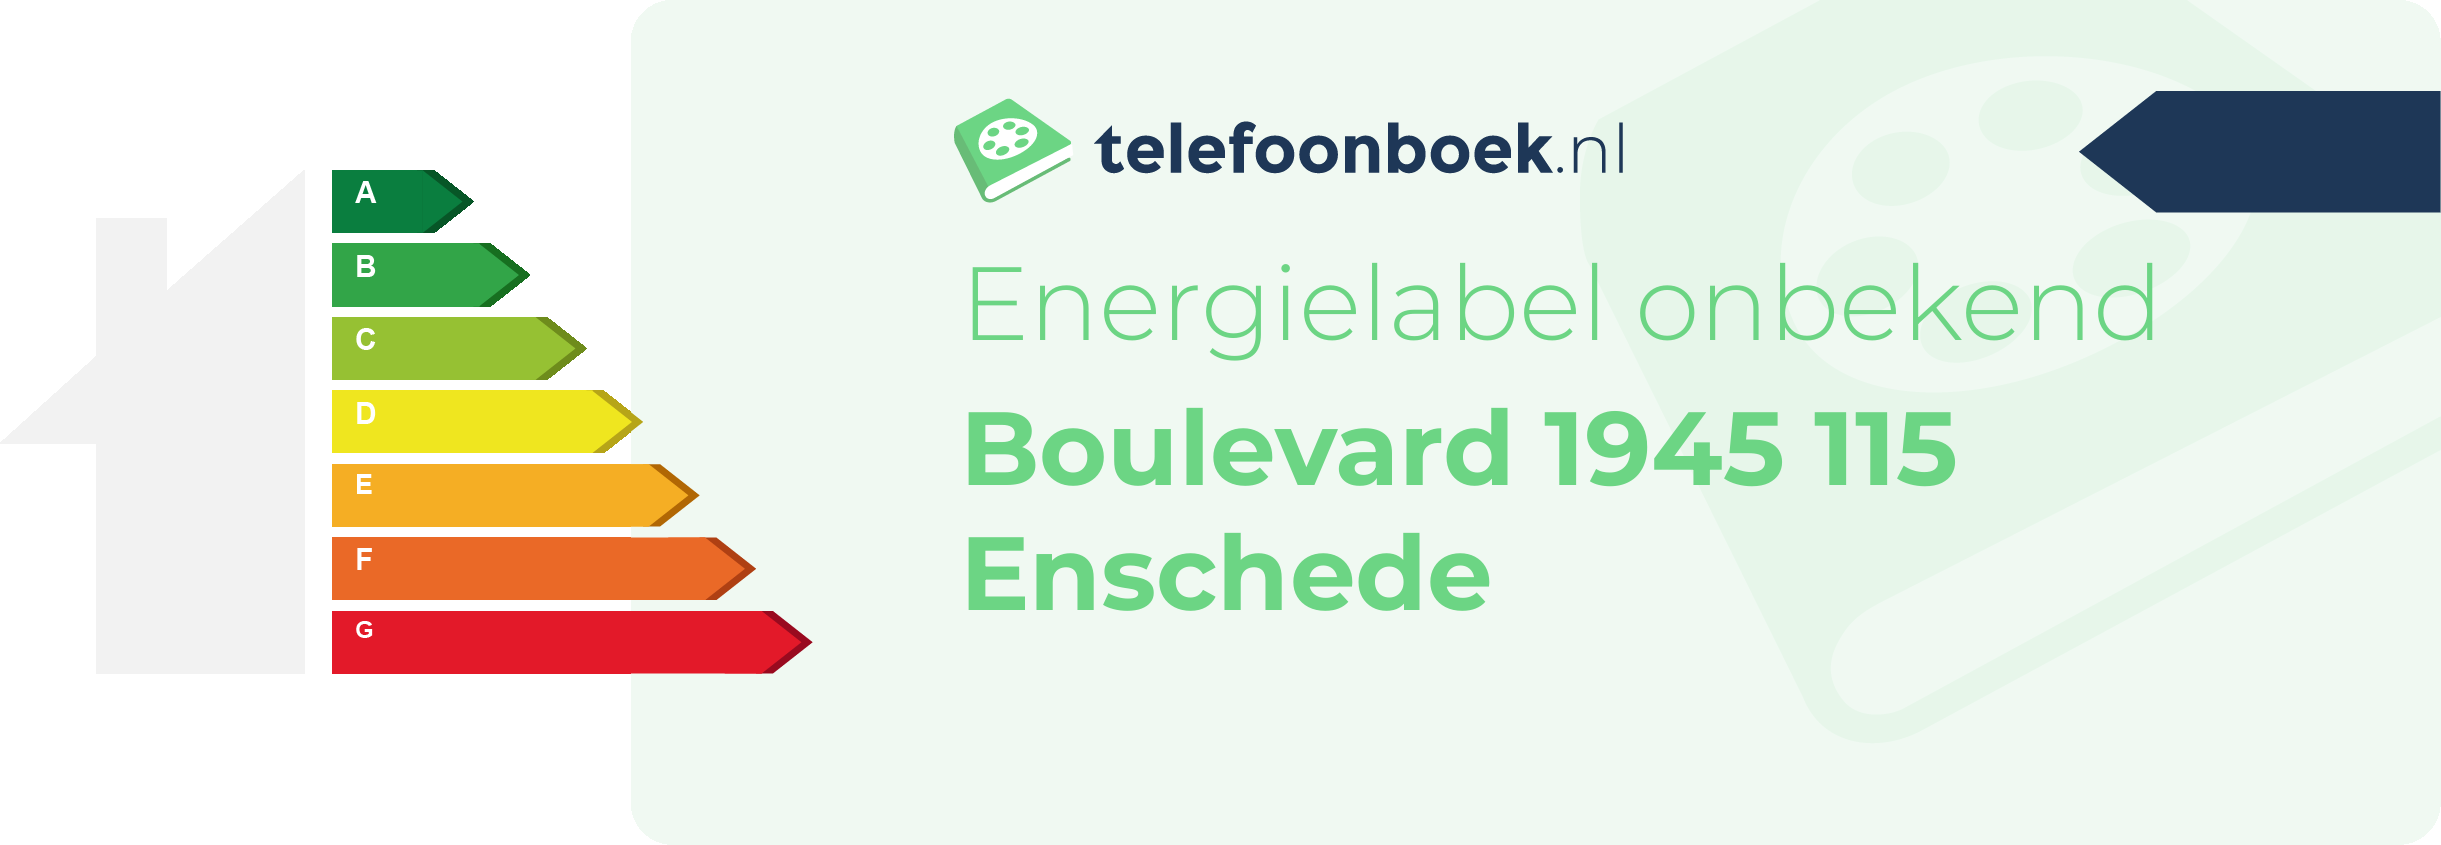 Energielabel Boulevard 1945 115 Enschede